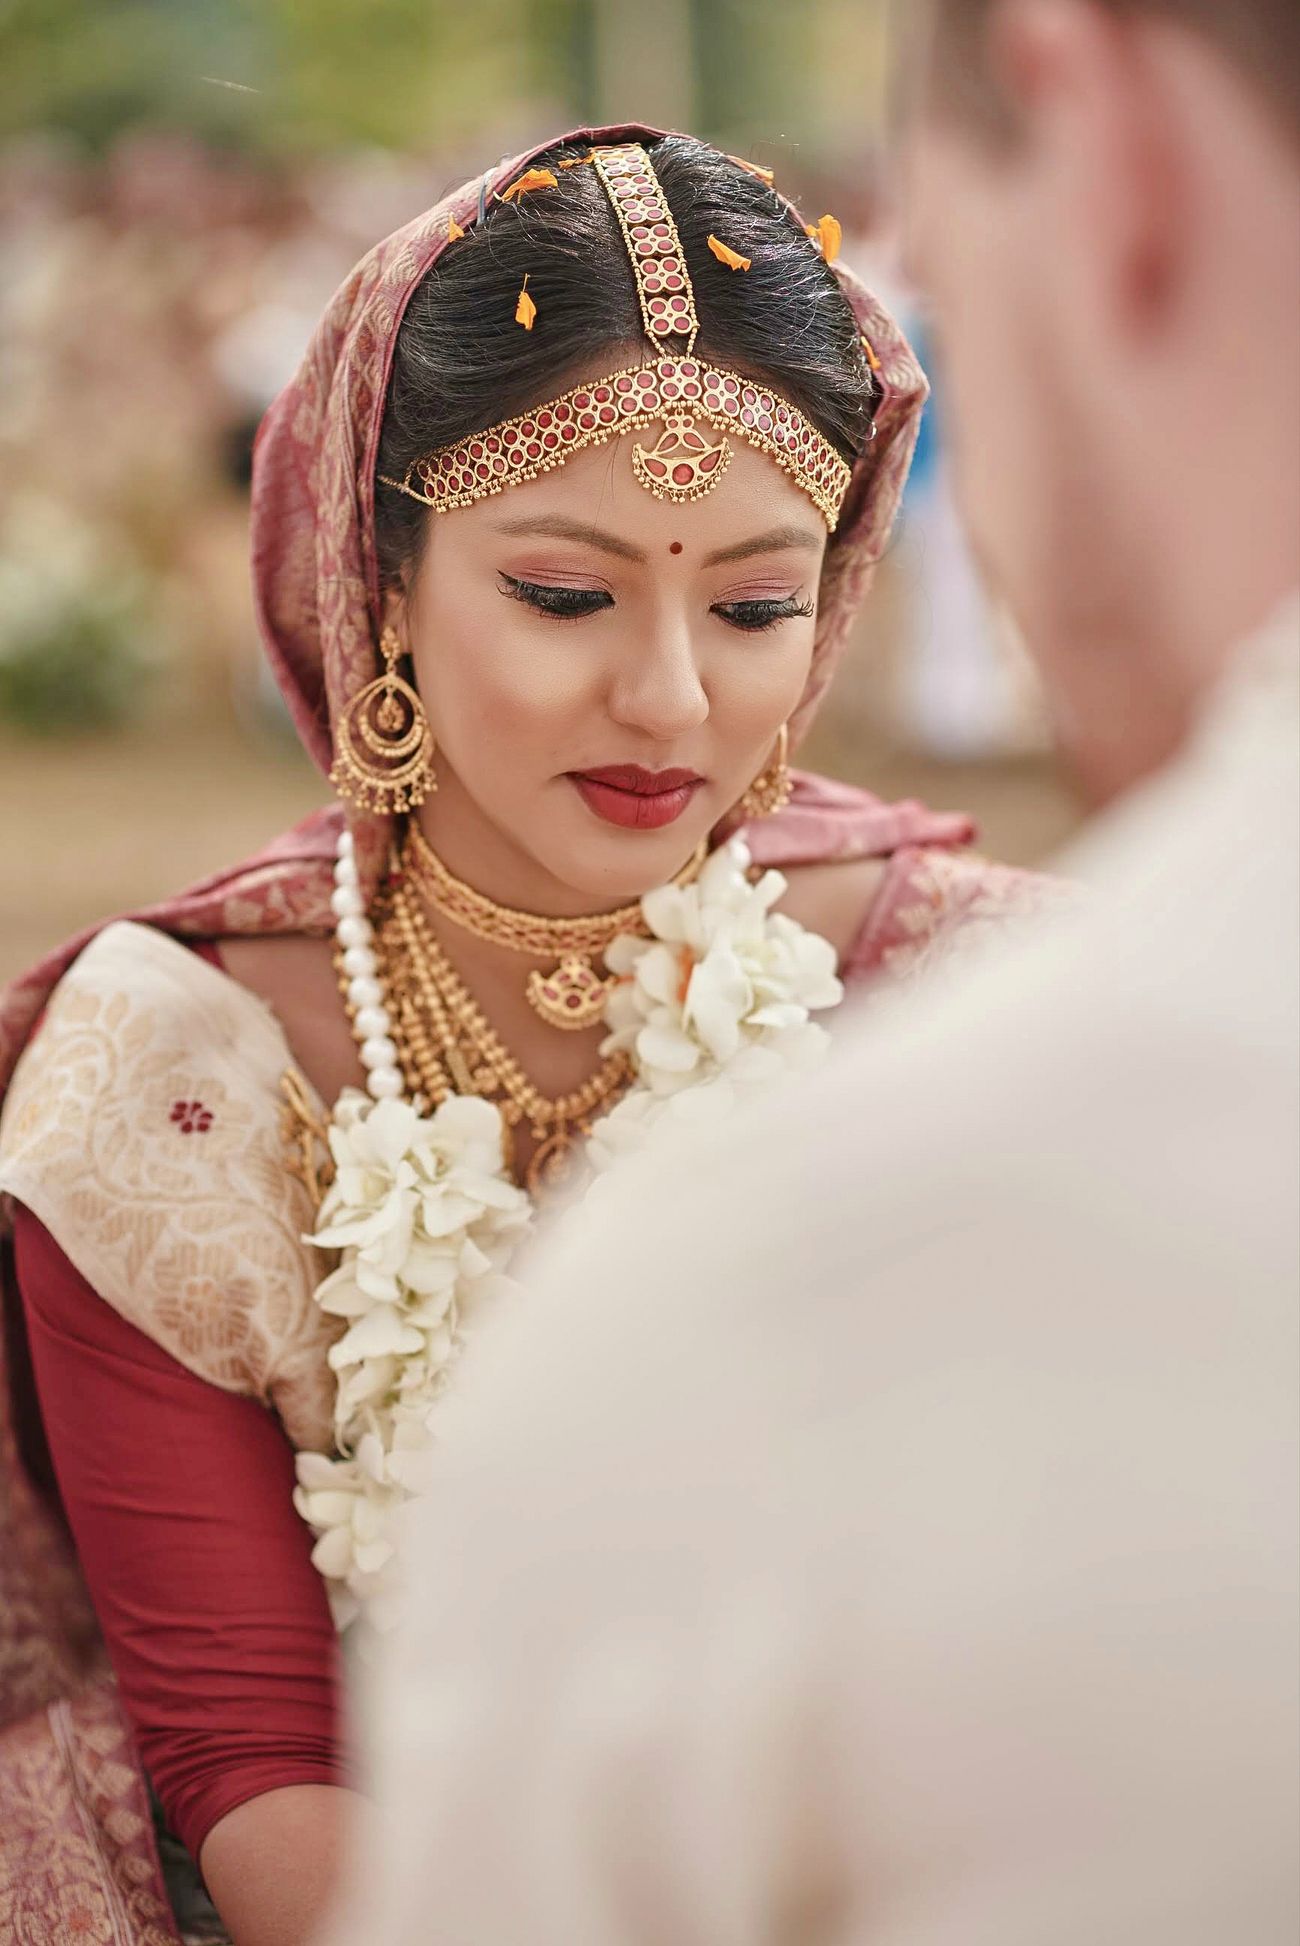 Assamese bride in traditional jewellery